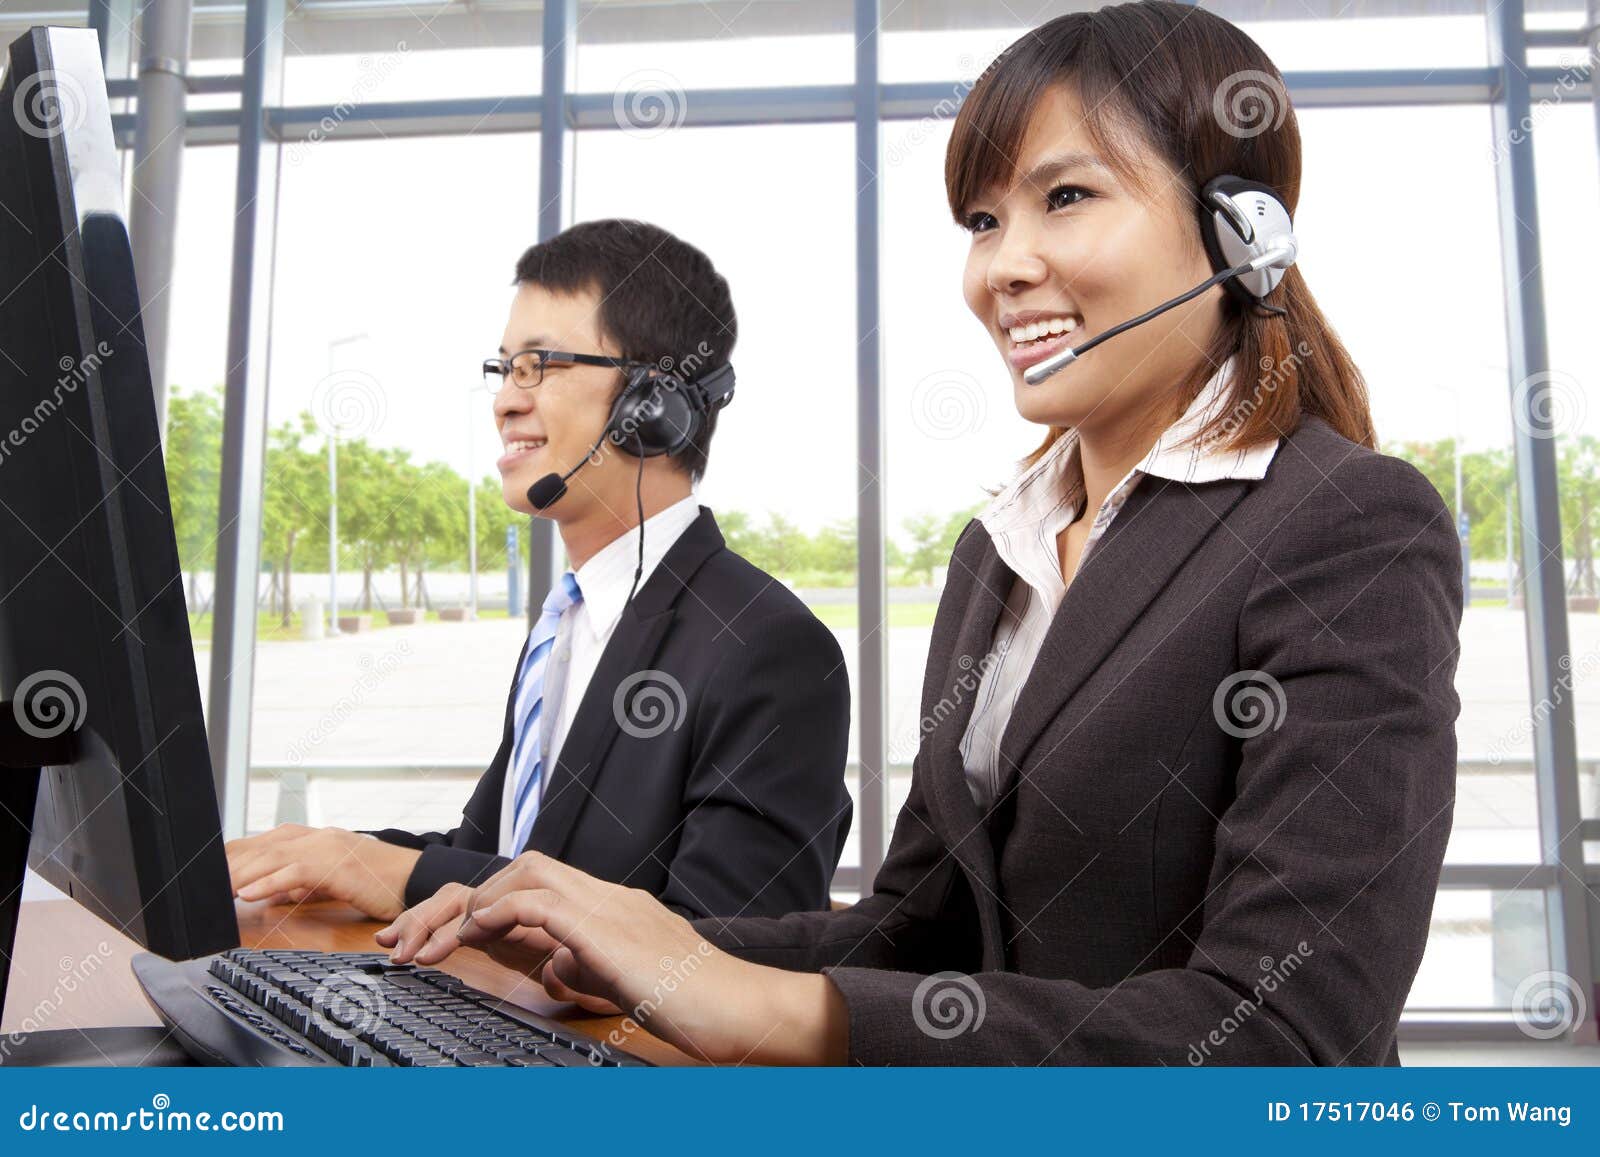 customer service representative in modern office